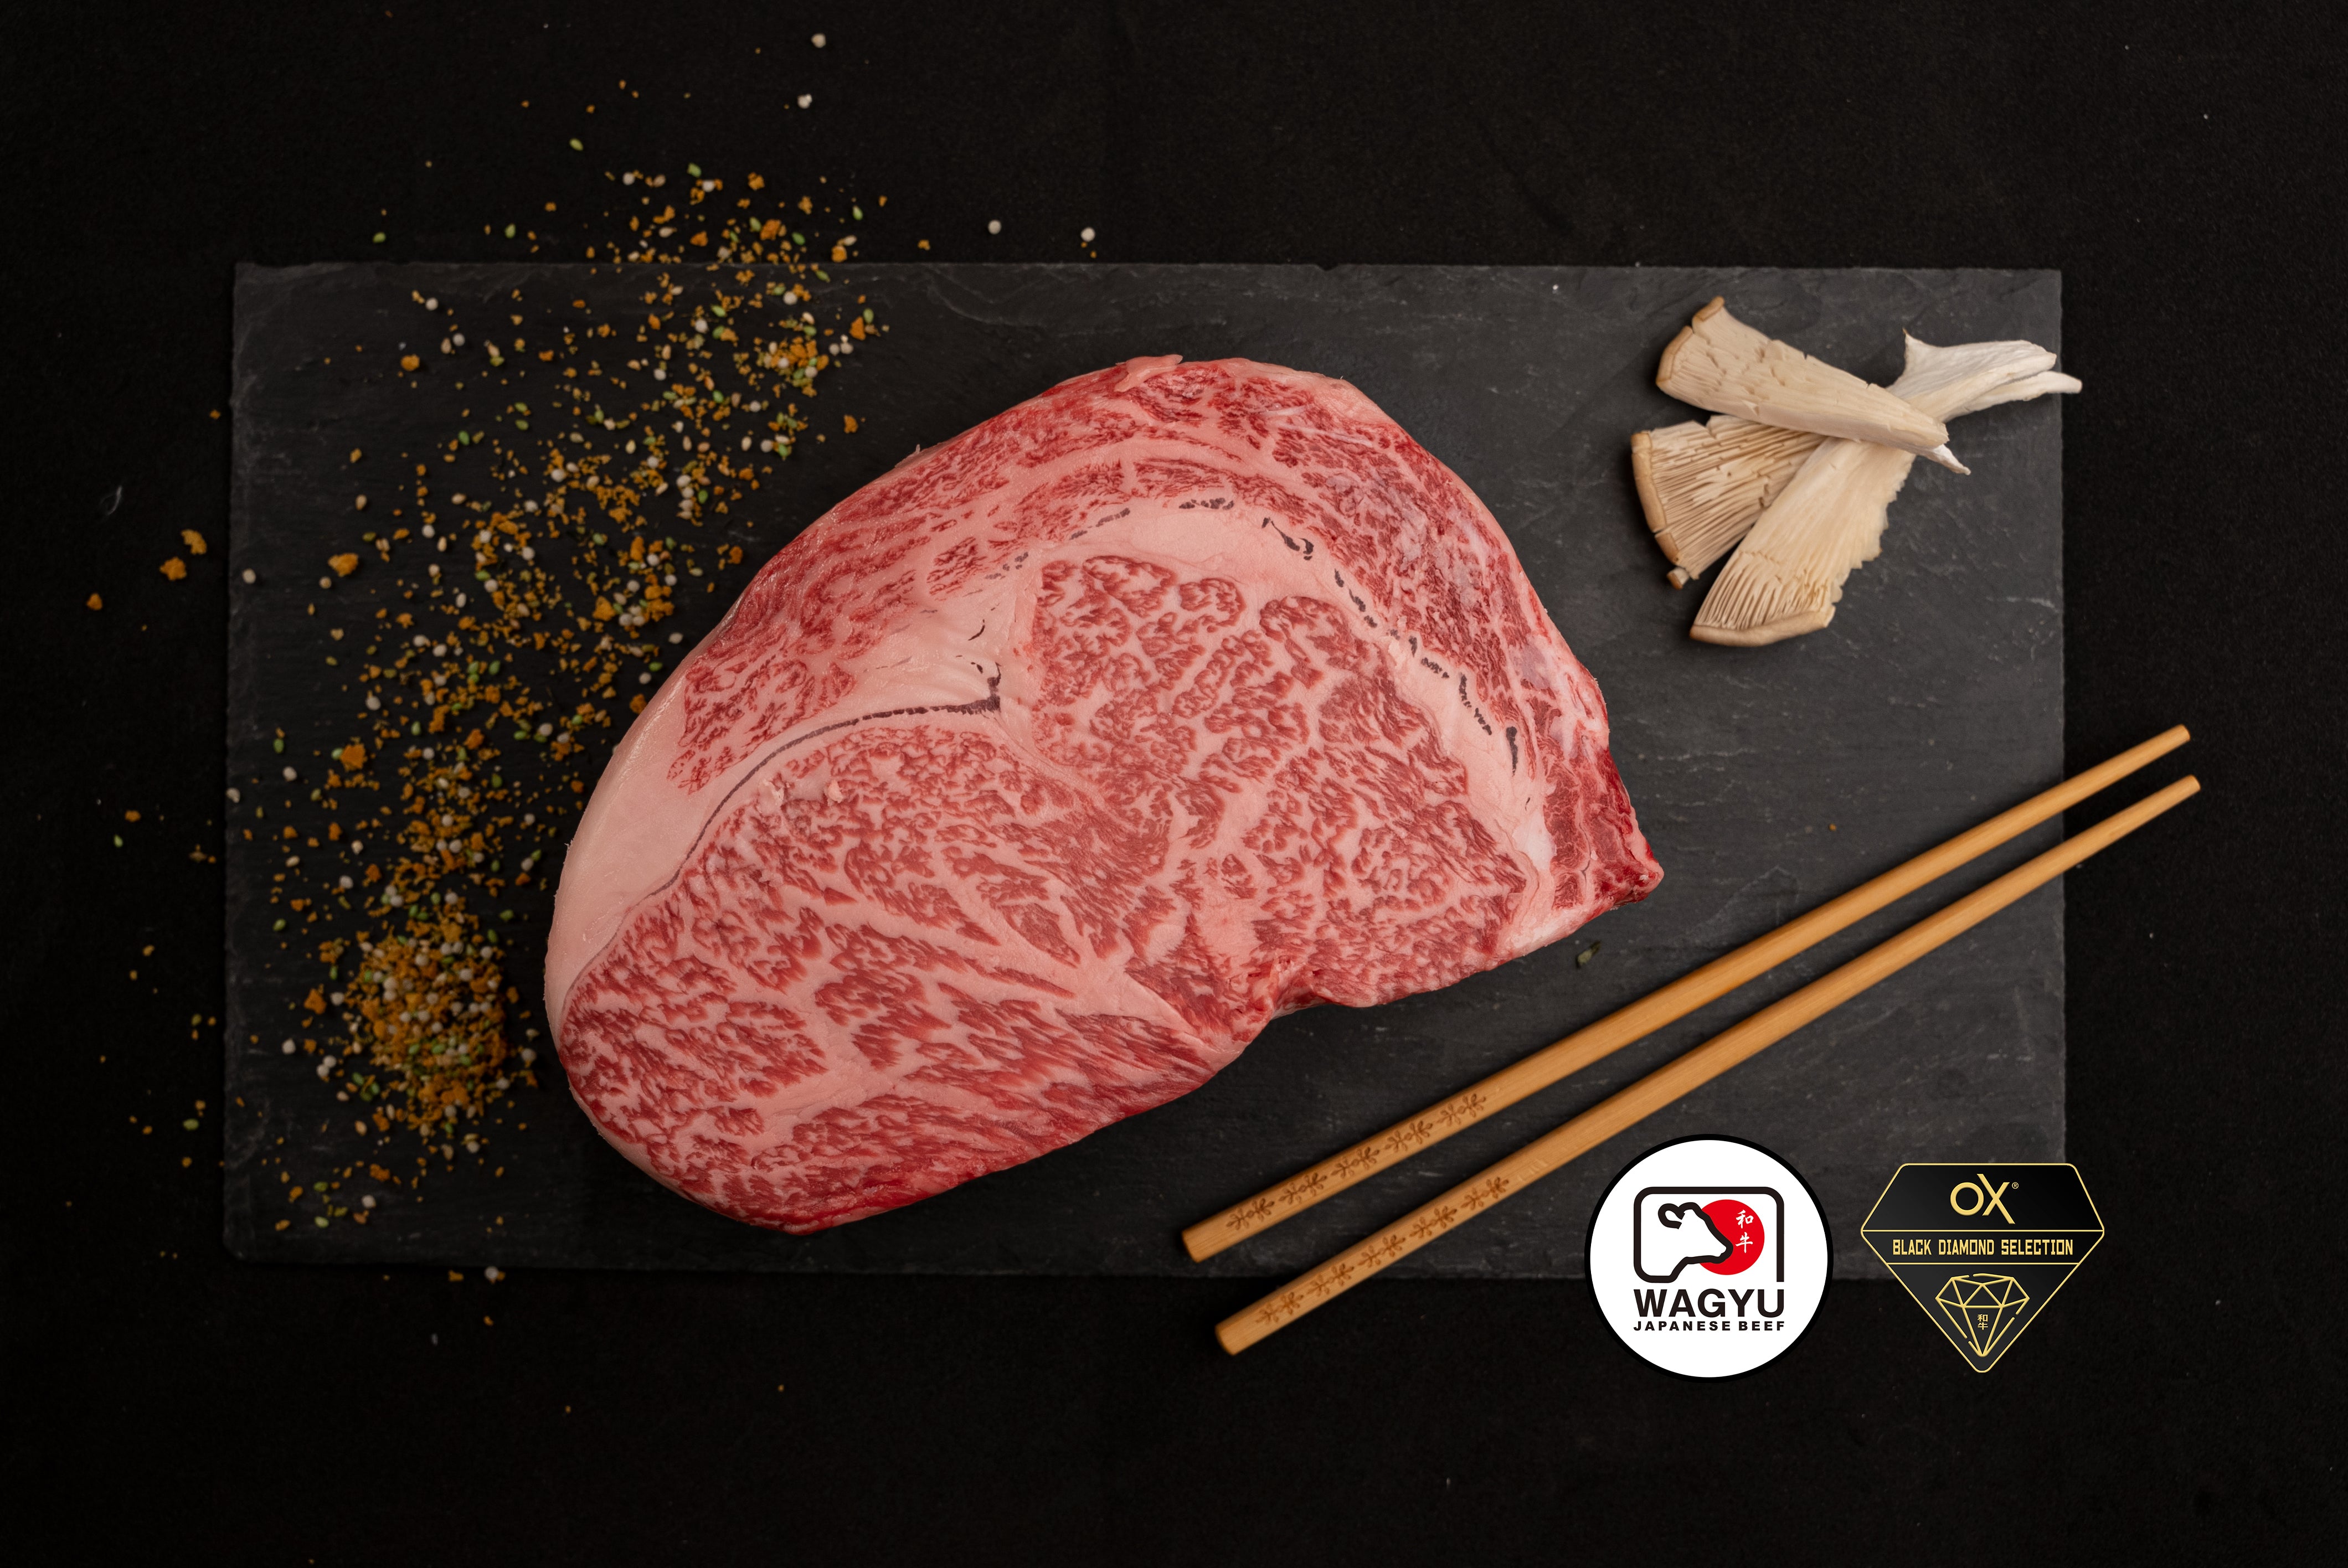 Japanese Wagyu crowned world's best steak